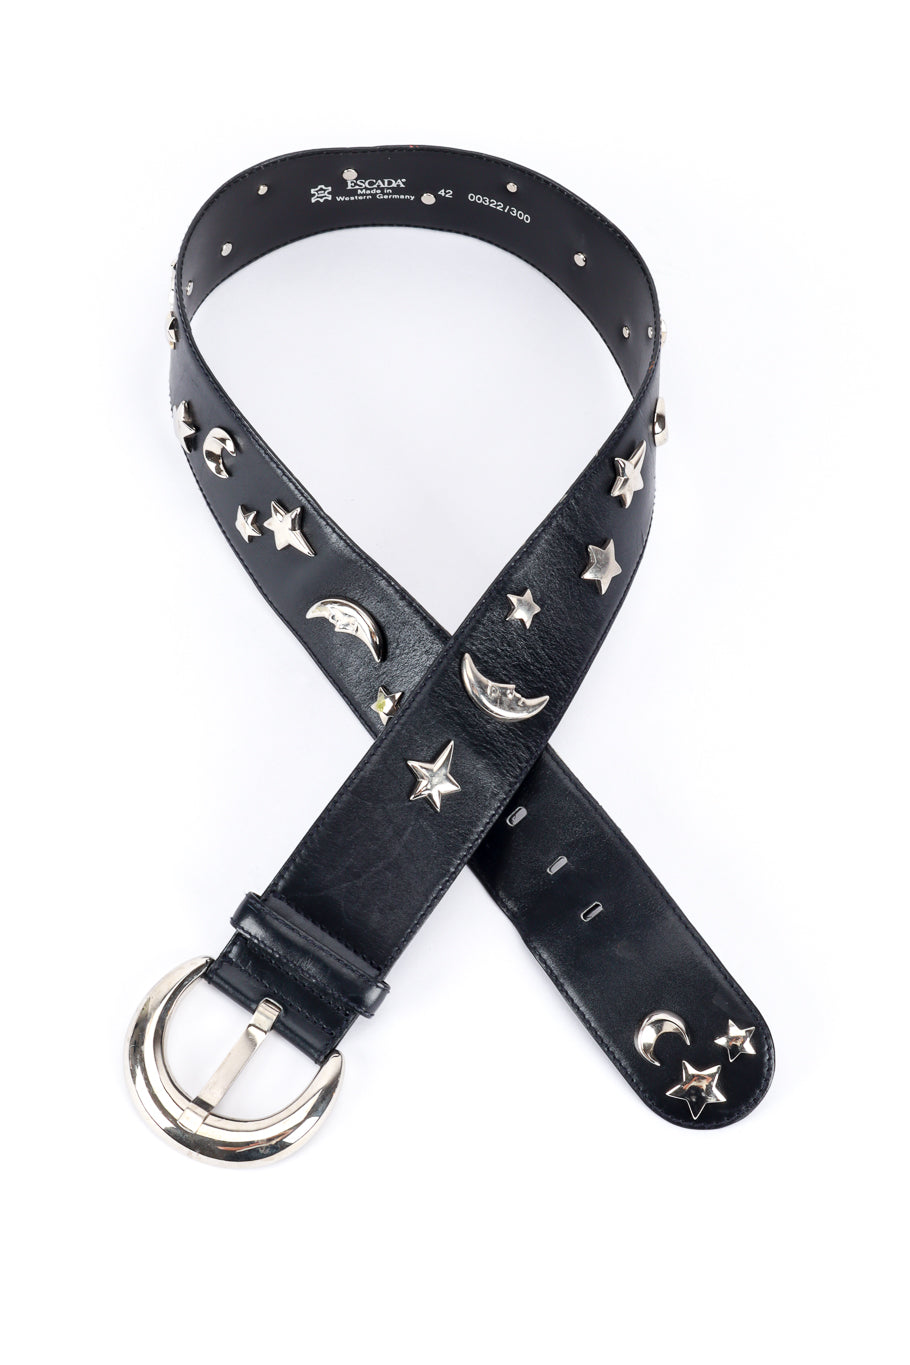 Vintage Escada Moon & Star Studded Belt front overlapped @recess la